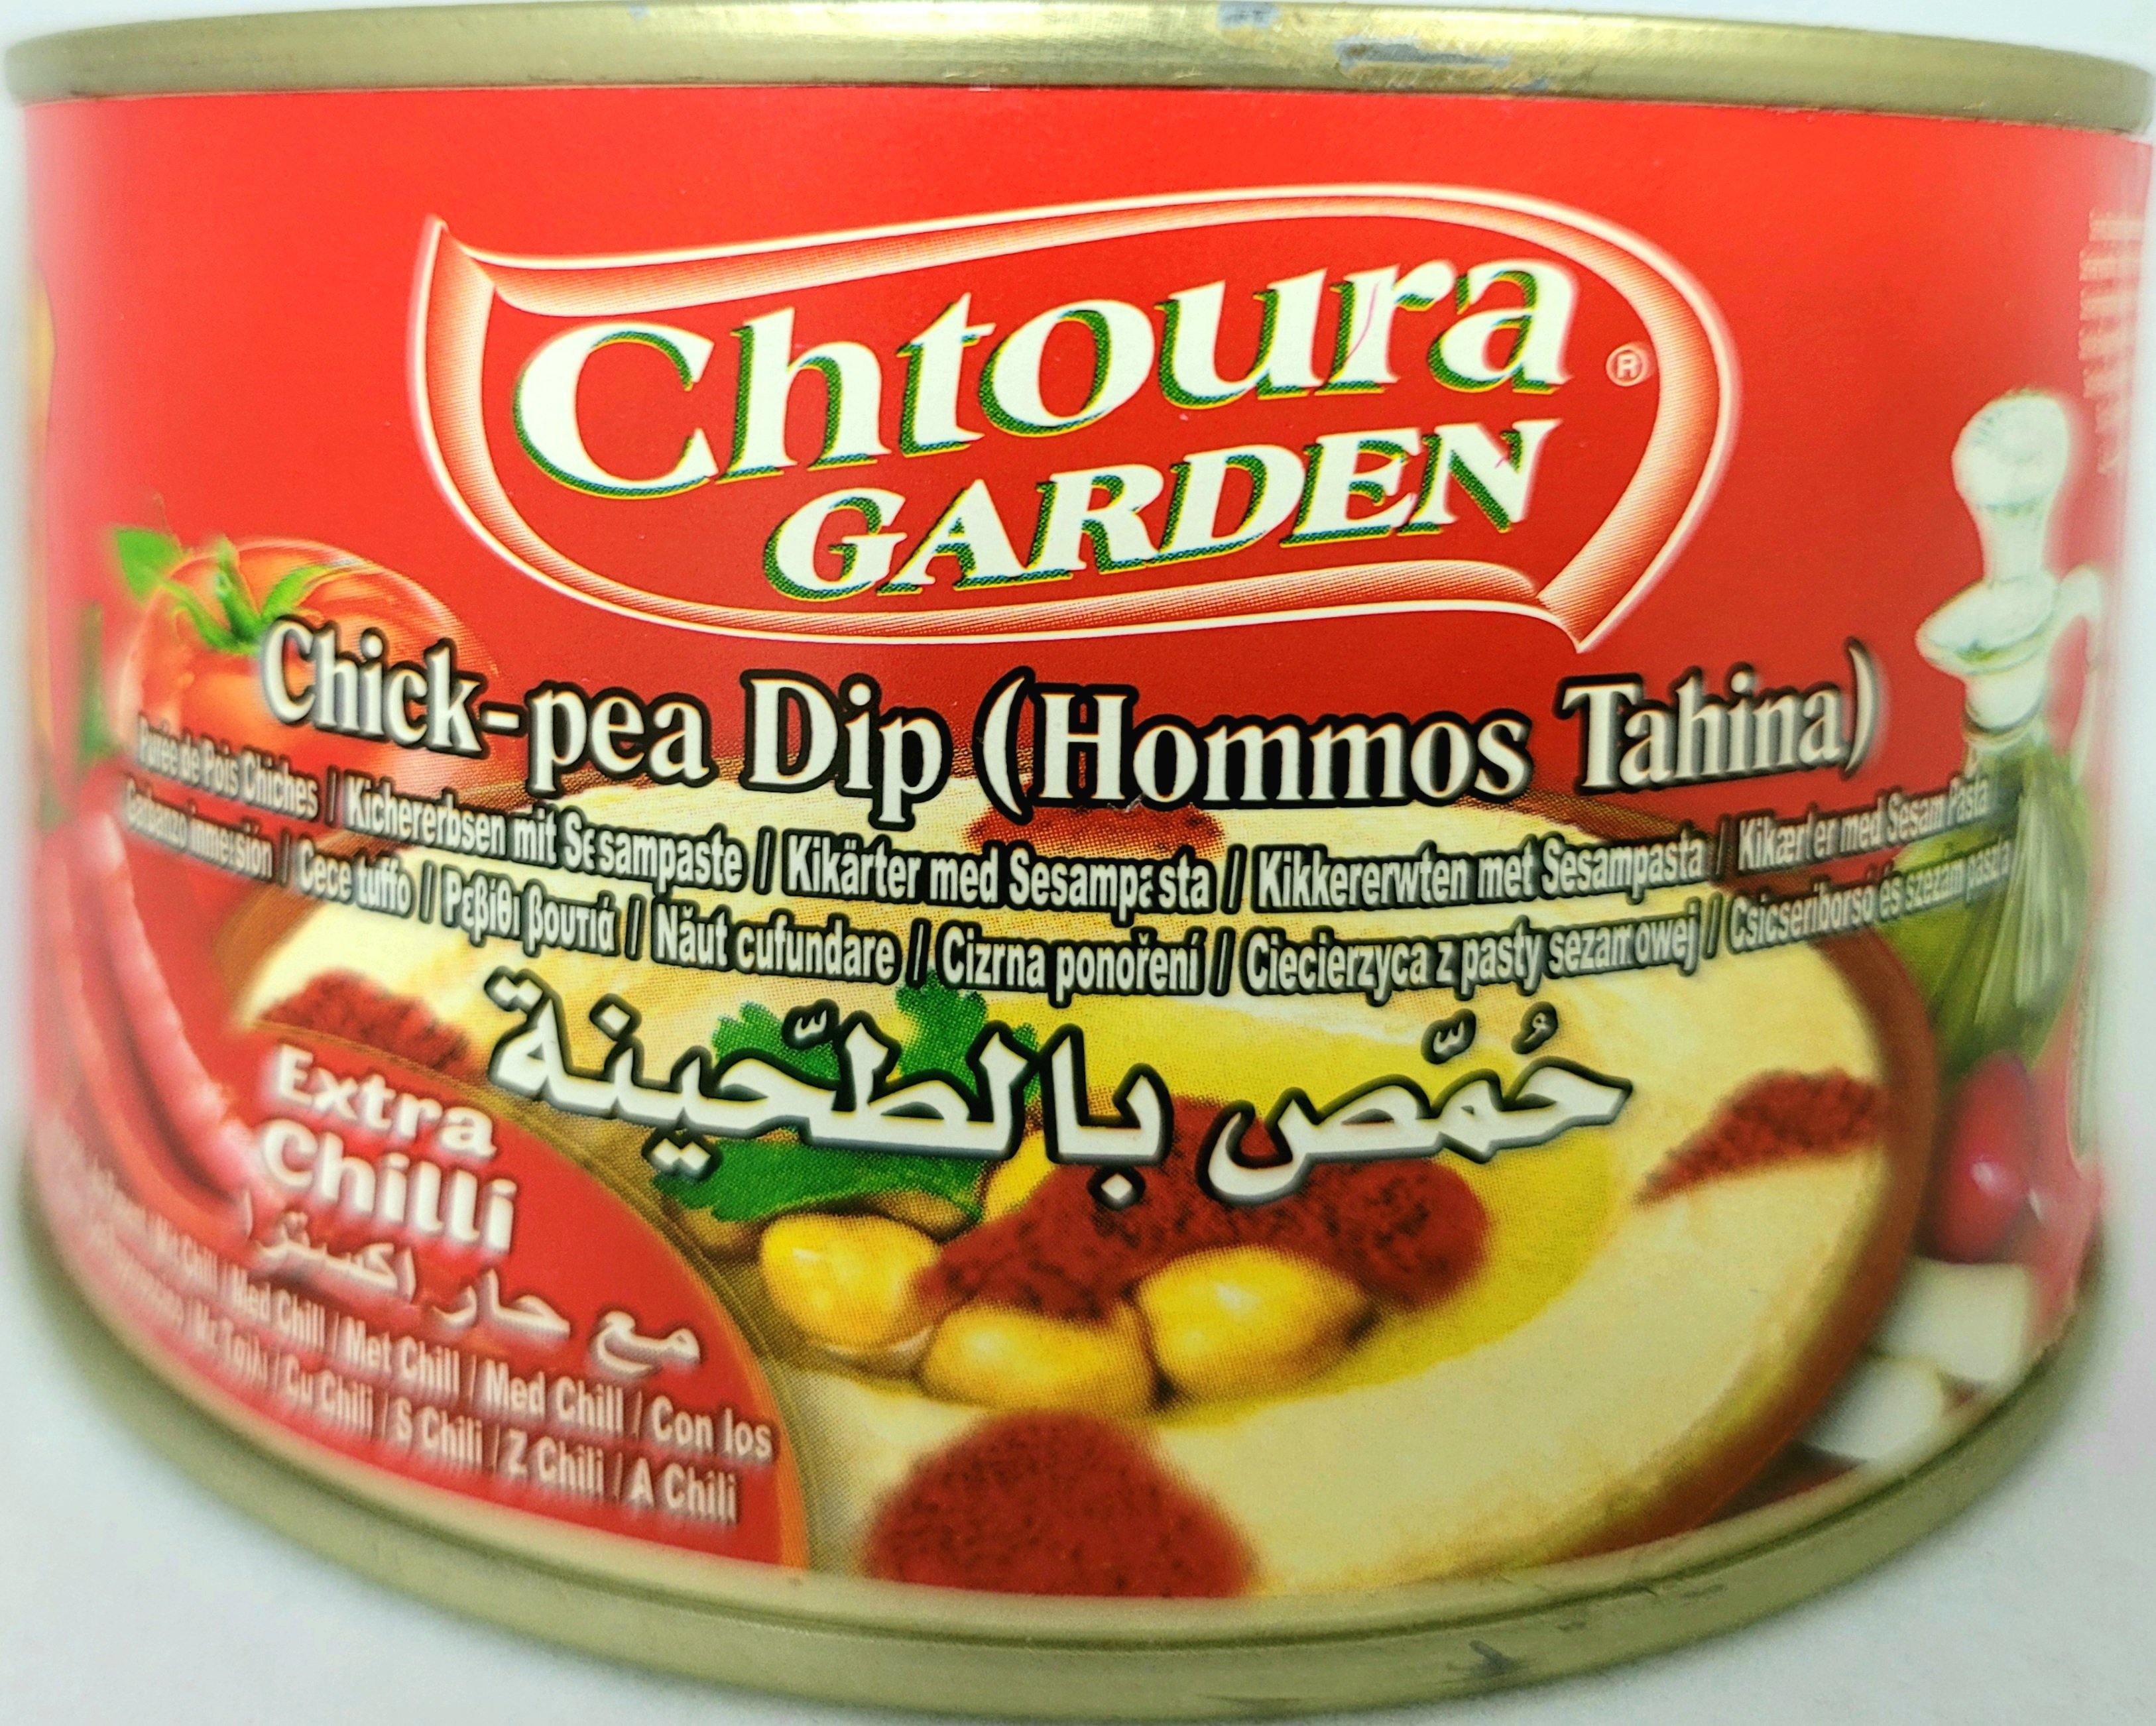 Chtoura Garden Chickpeas Dip Hommos Tahina with Chili 420g - Arabian Shopping Zone